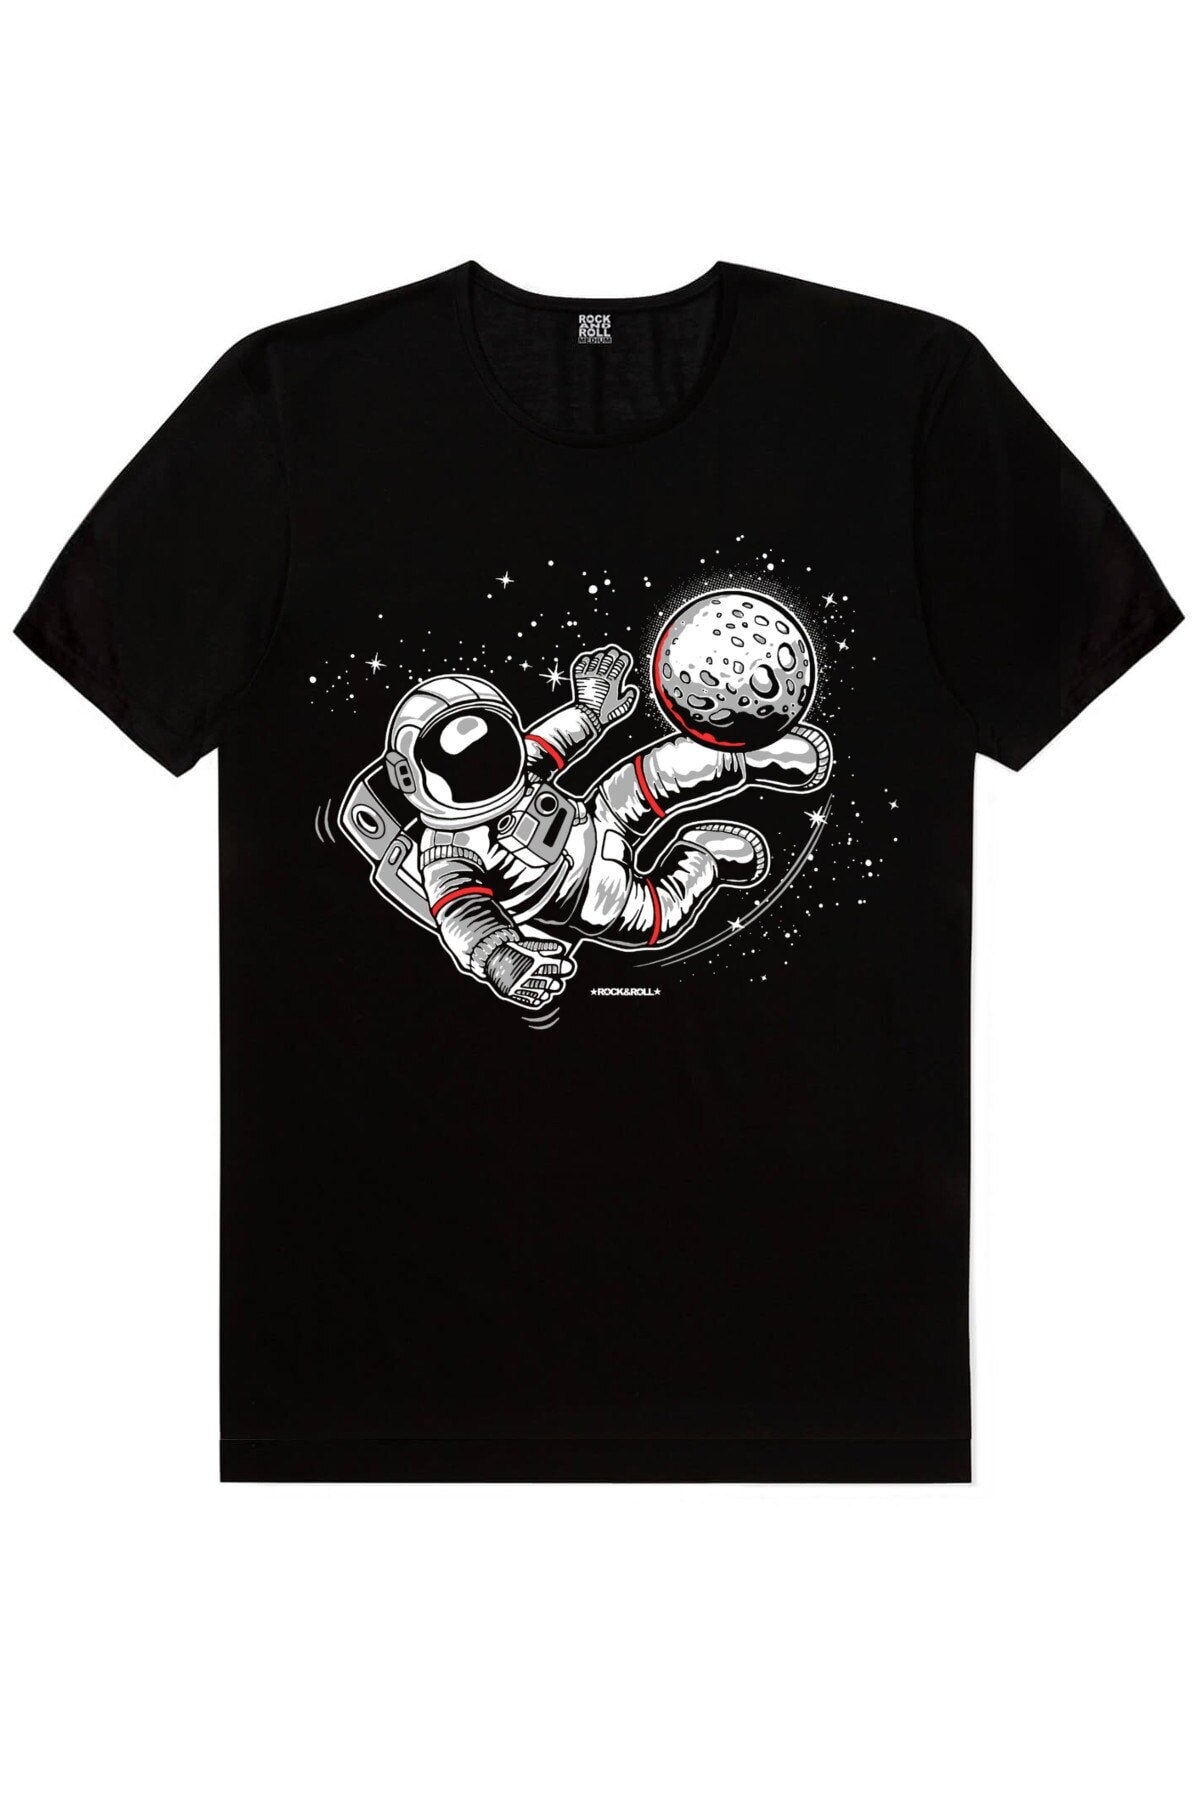 Kaykaycı Astronot, Futbolcu Astronot Erkek2'li Eko Paket T-shirt